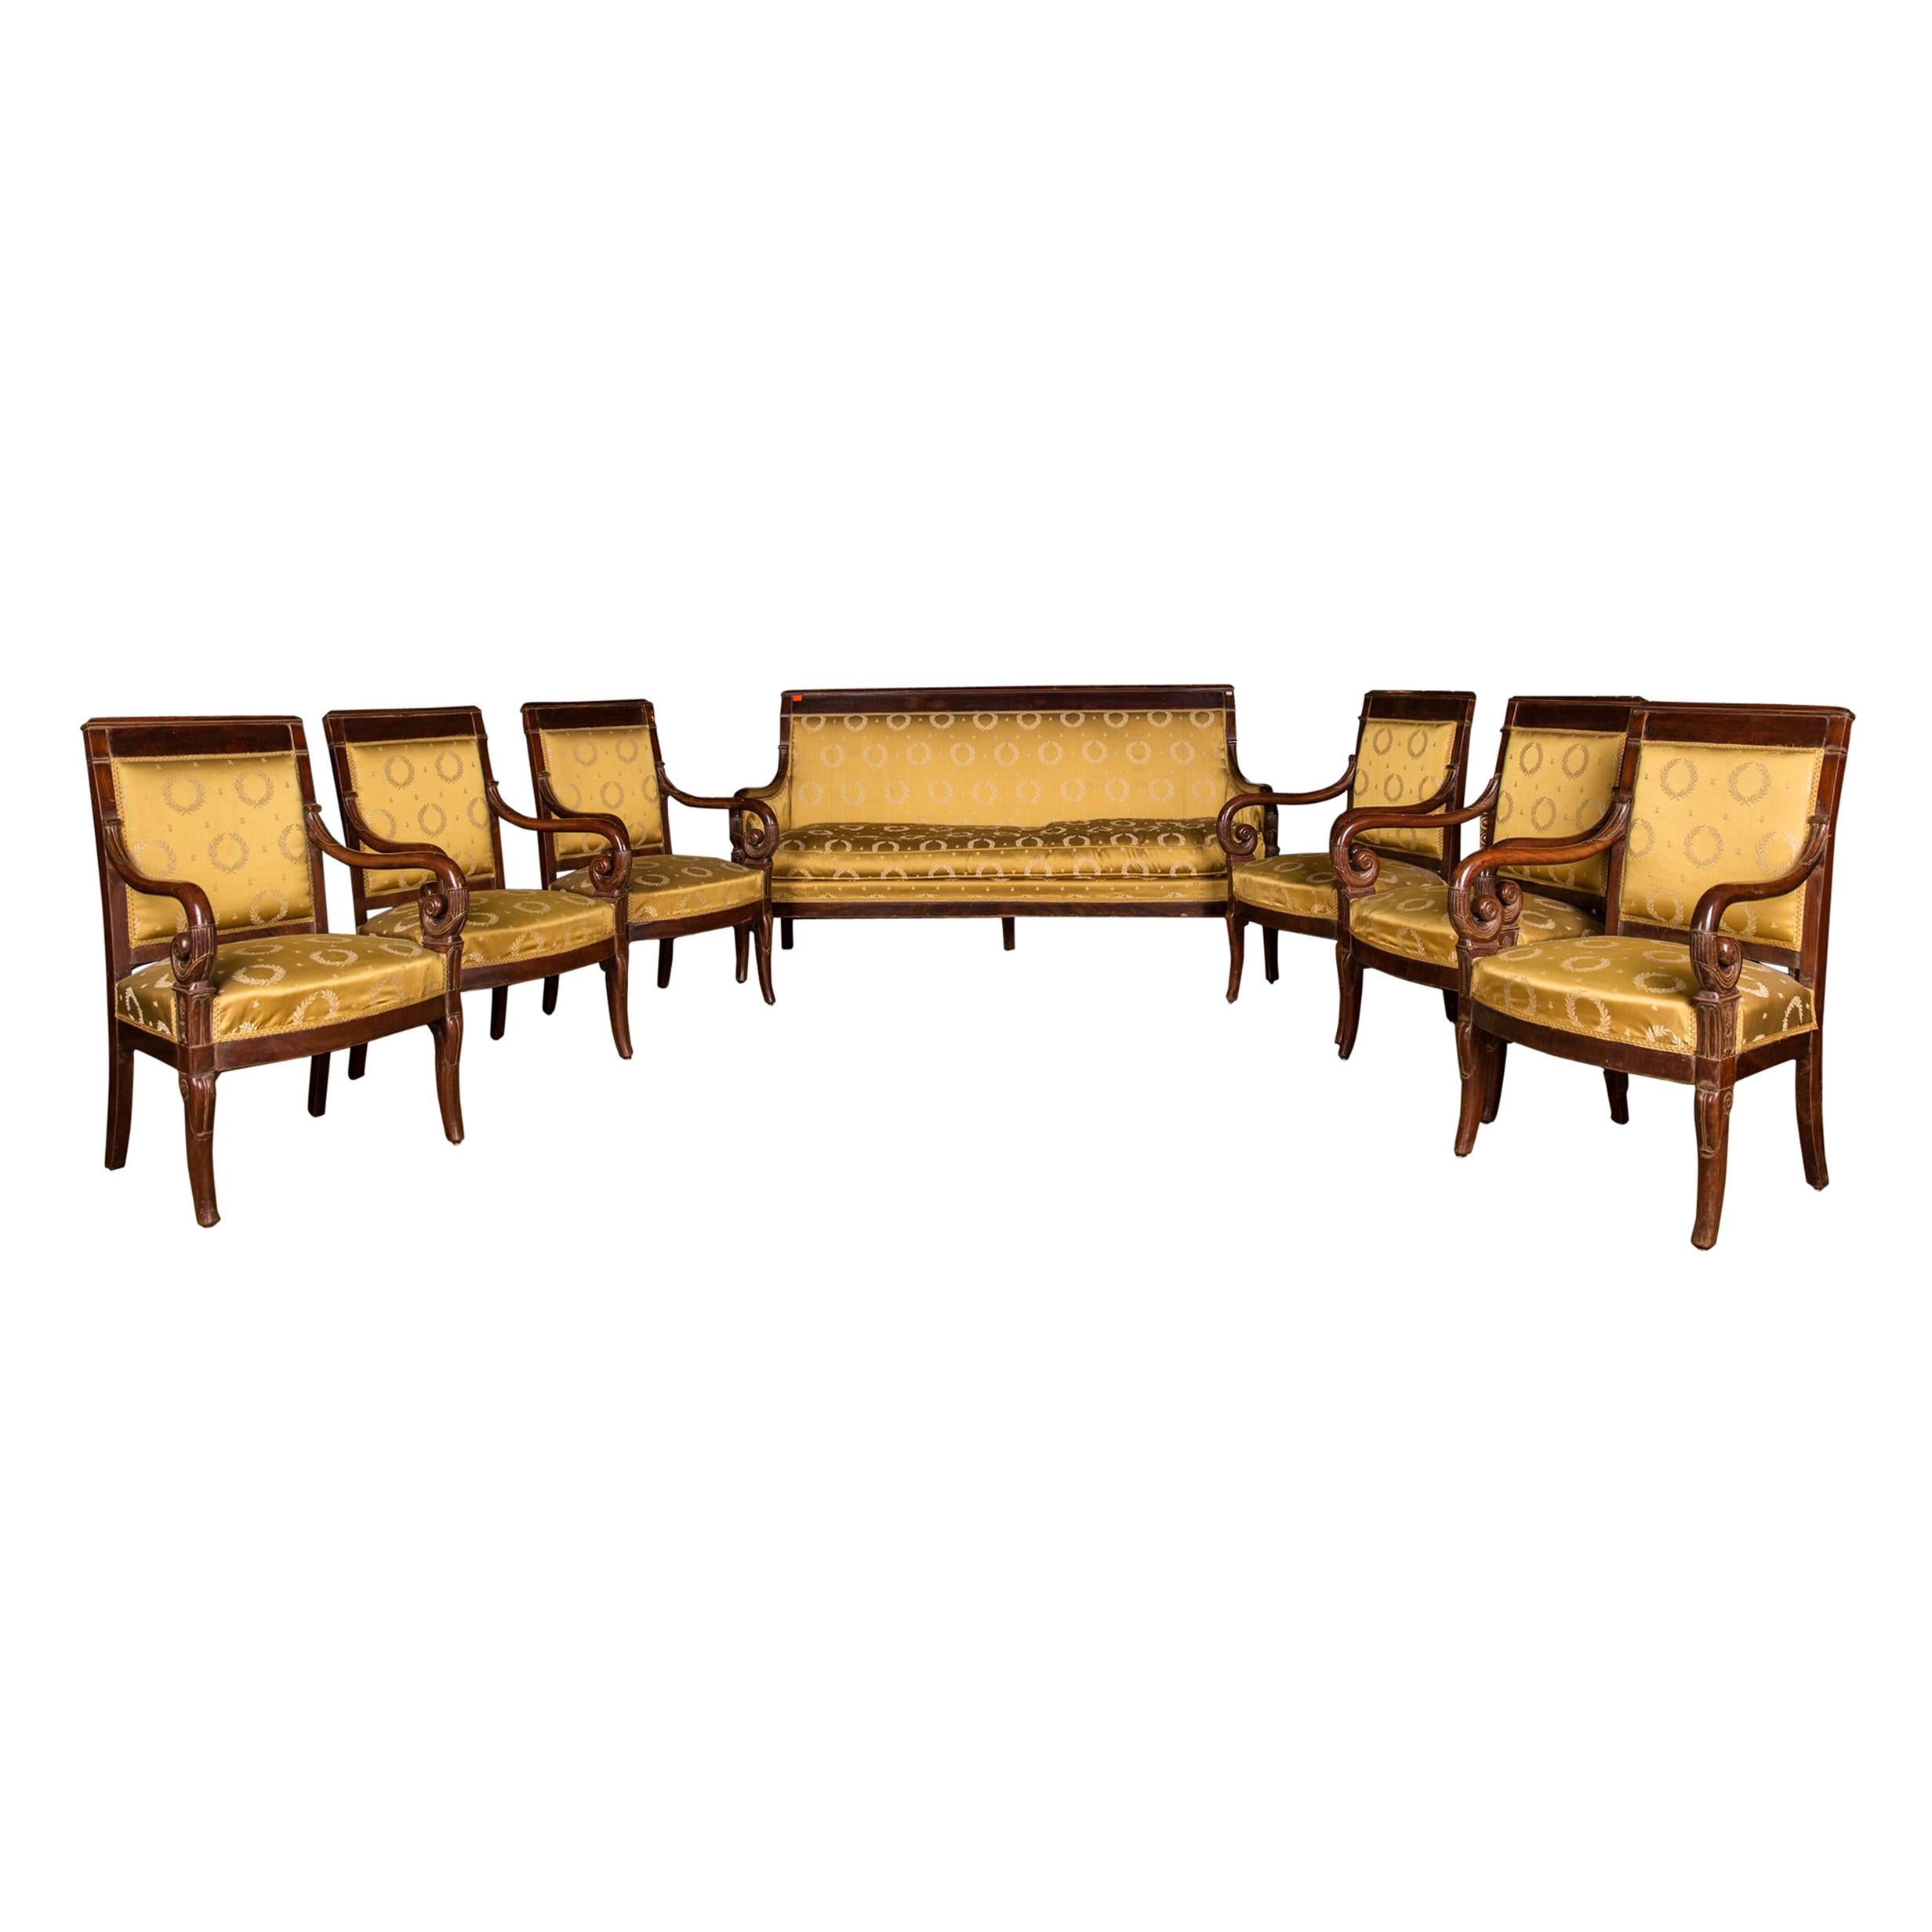 19th Century Original French Empire Sofa and Armchair Set Made from Mahogany